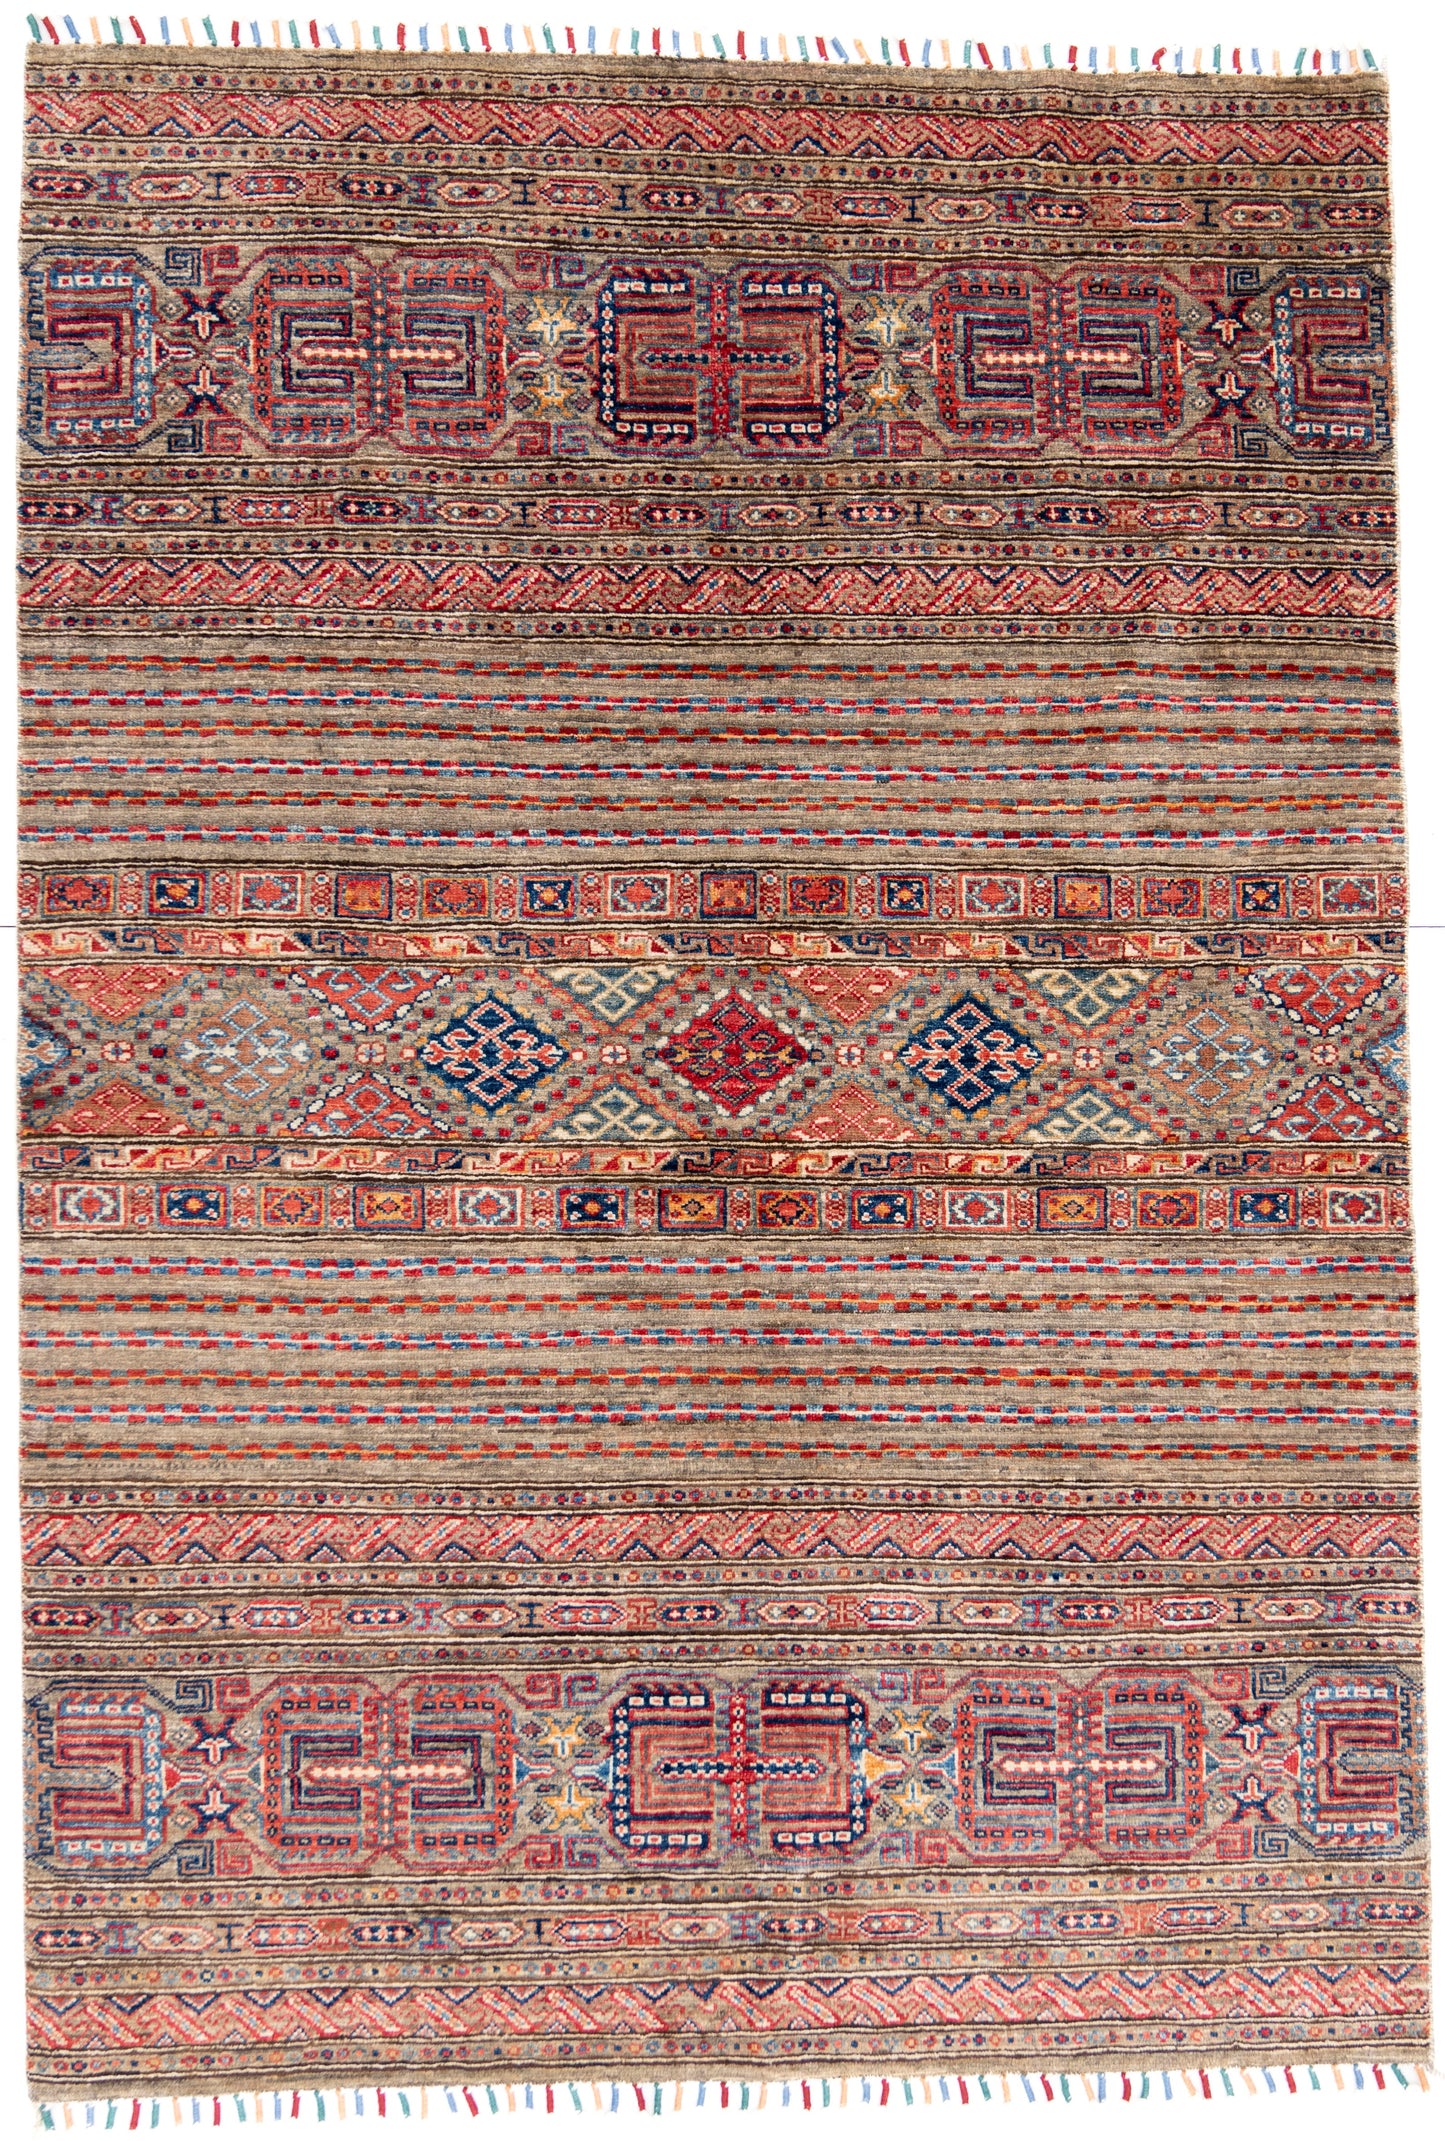 Stripy Grey Ariana Rubin Carpet with Multicoloured Tassels